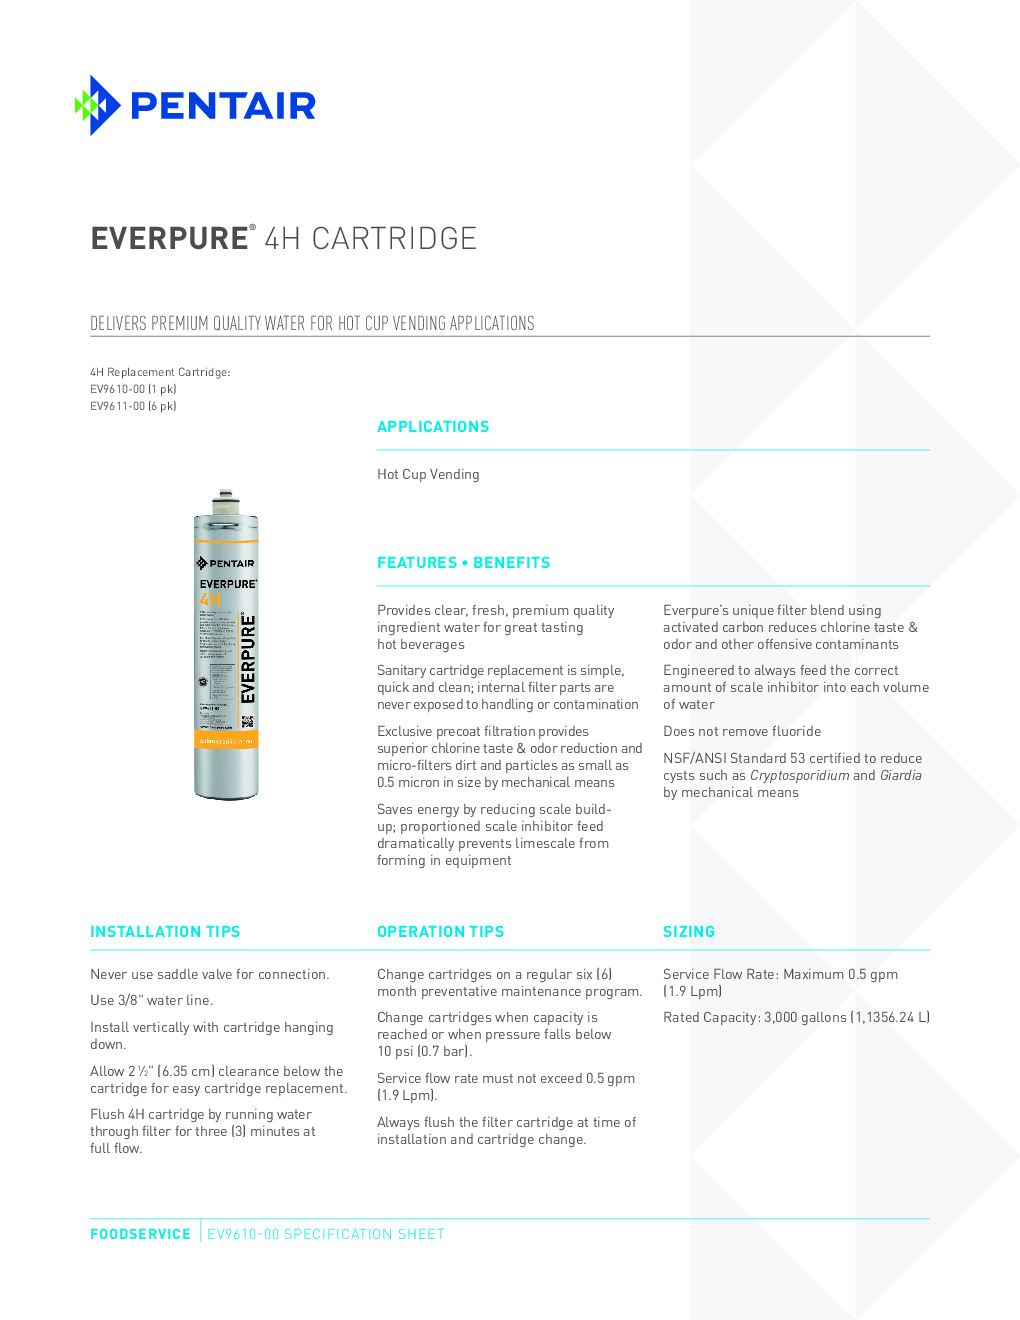 Everpure EV961100 Cartridge Water Filtration System